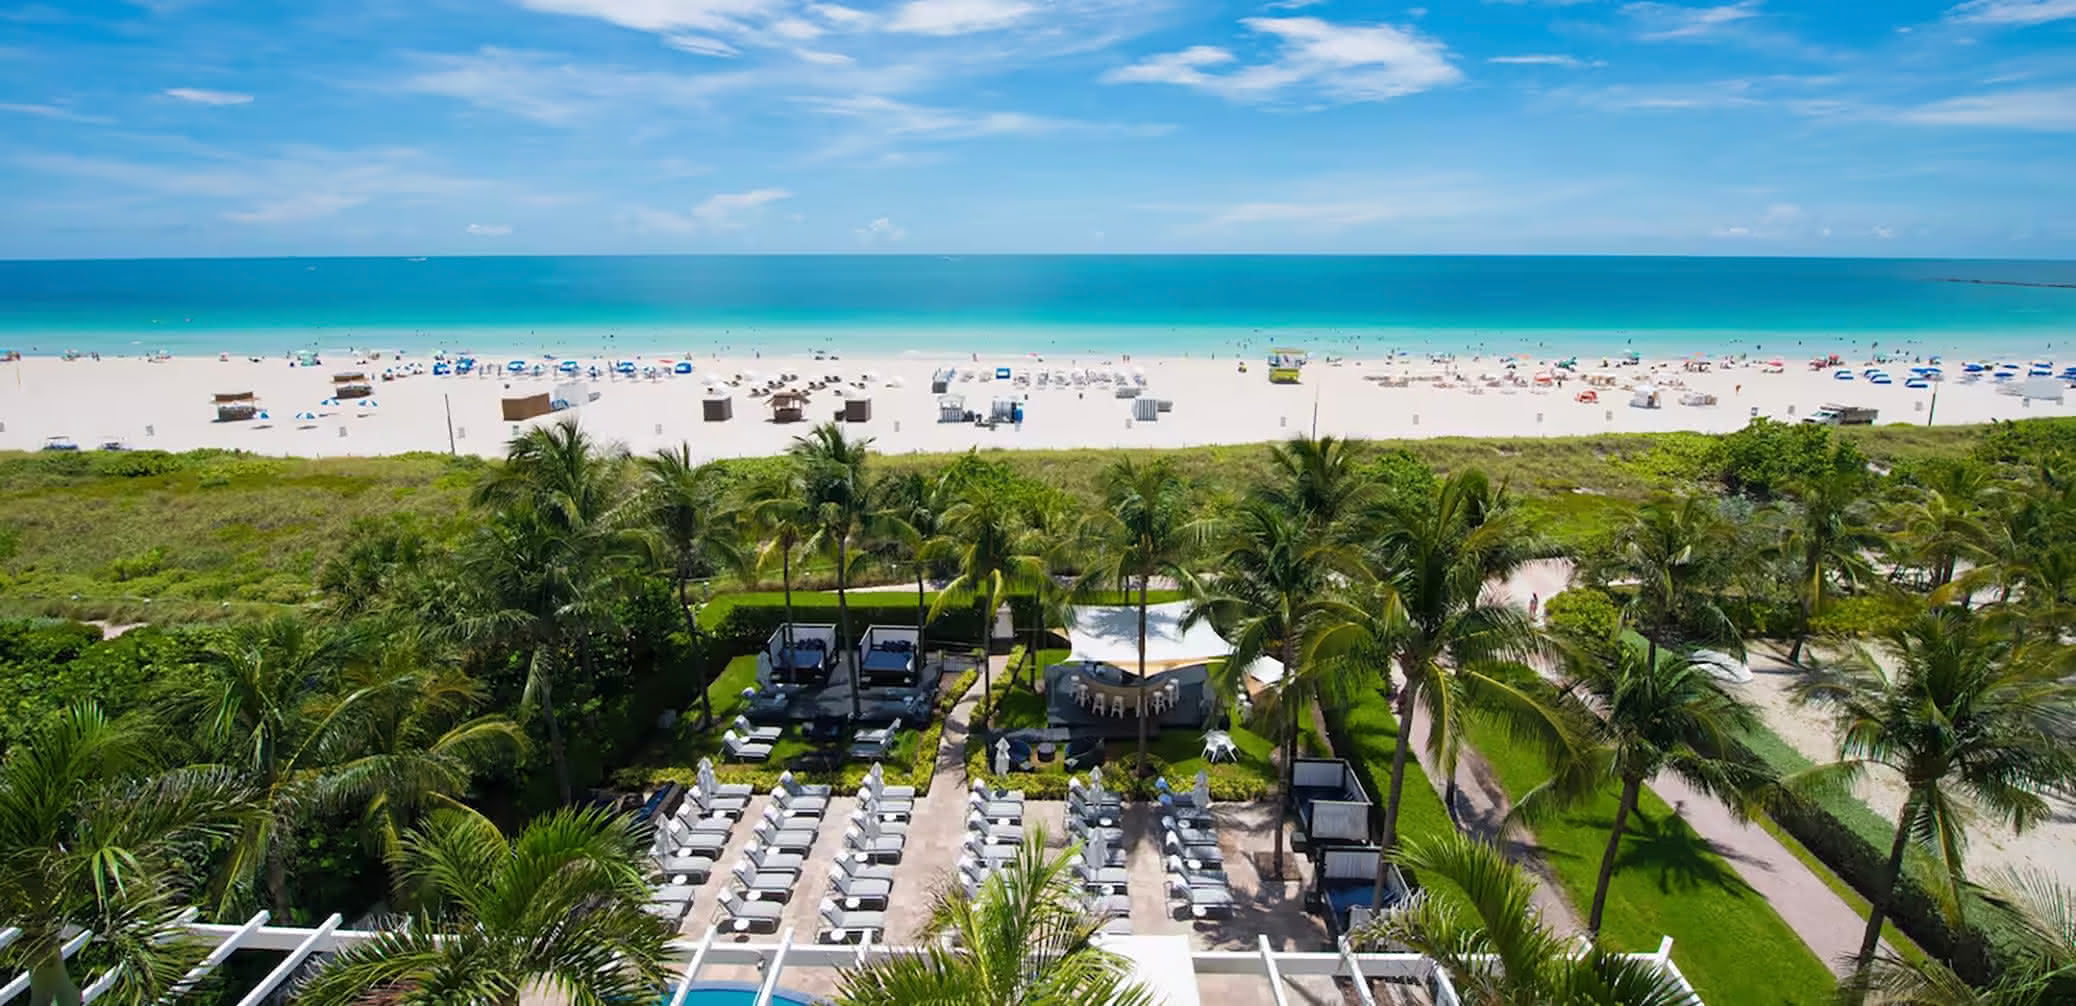 10 Best Hilton Hotels In Miami